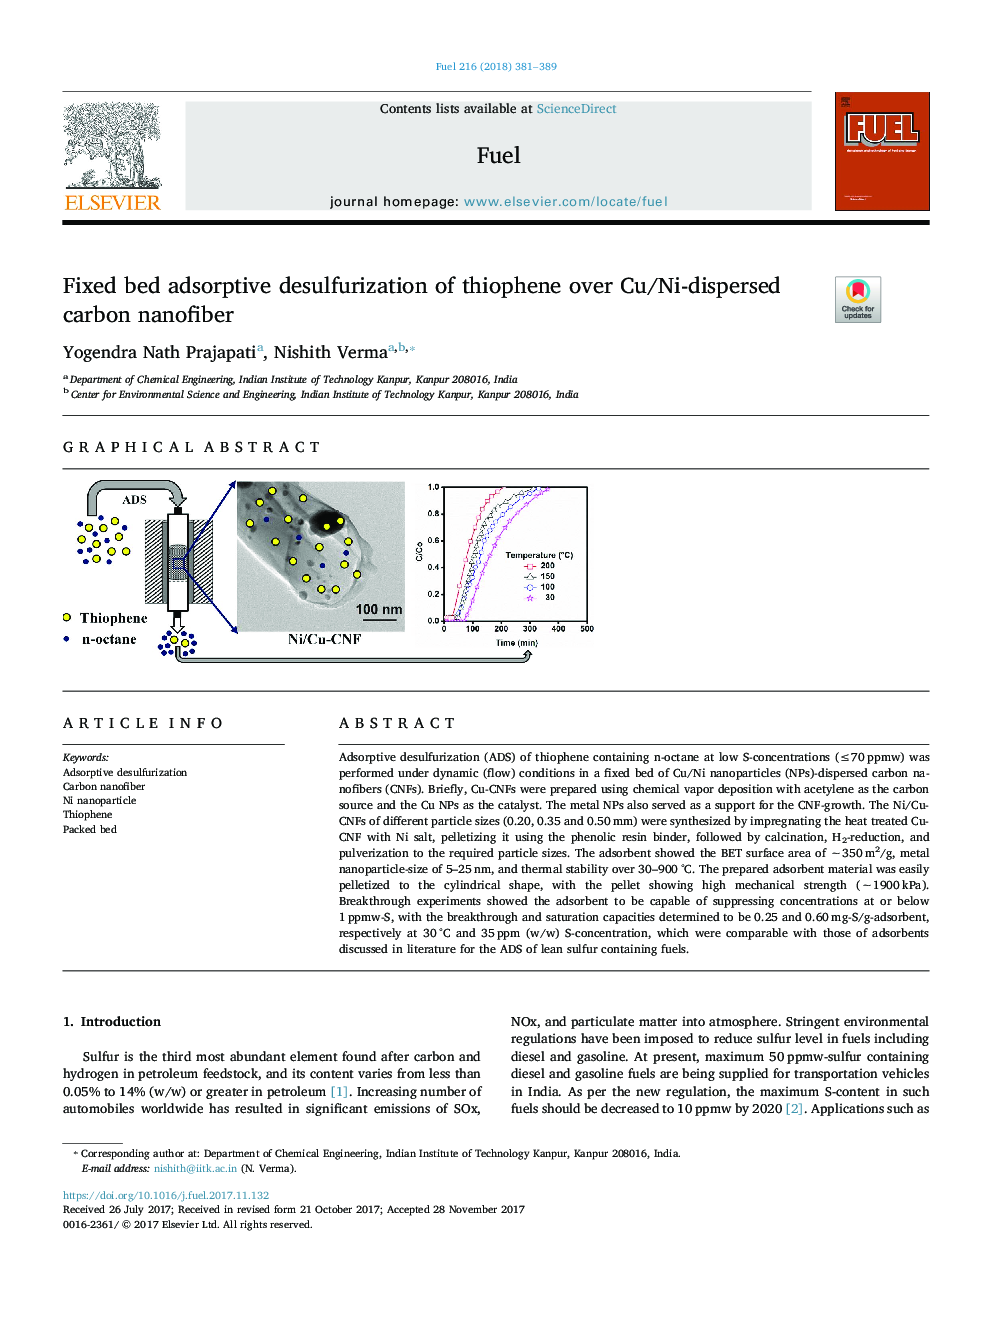 Fixed bed adsorptive desulfurization of thiophene over Cu/Ni-dispersed carbon nanofiber